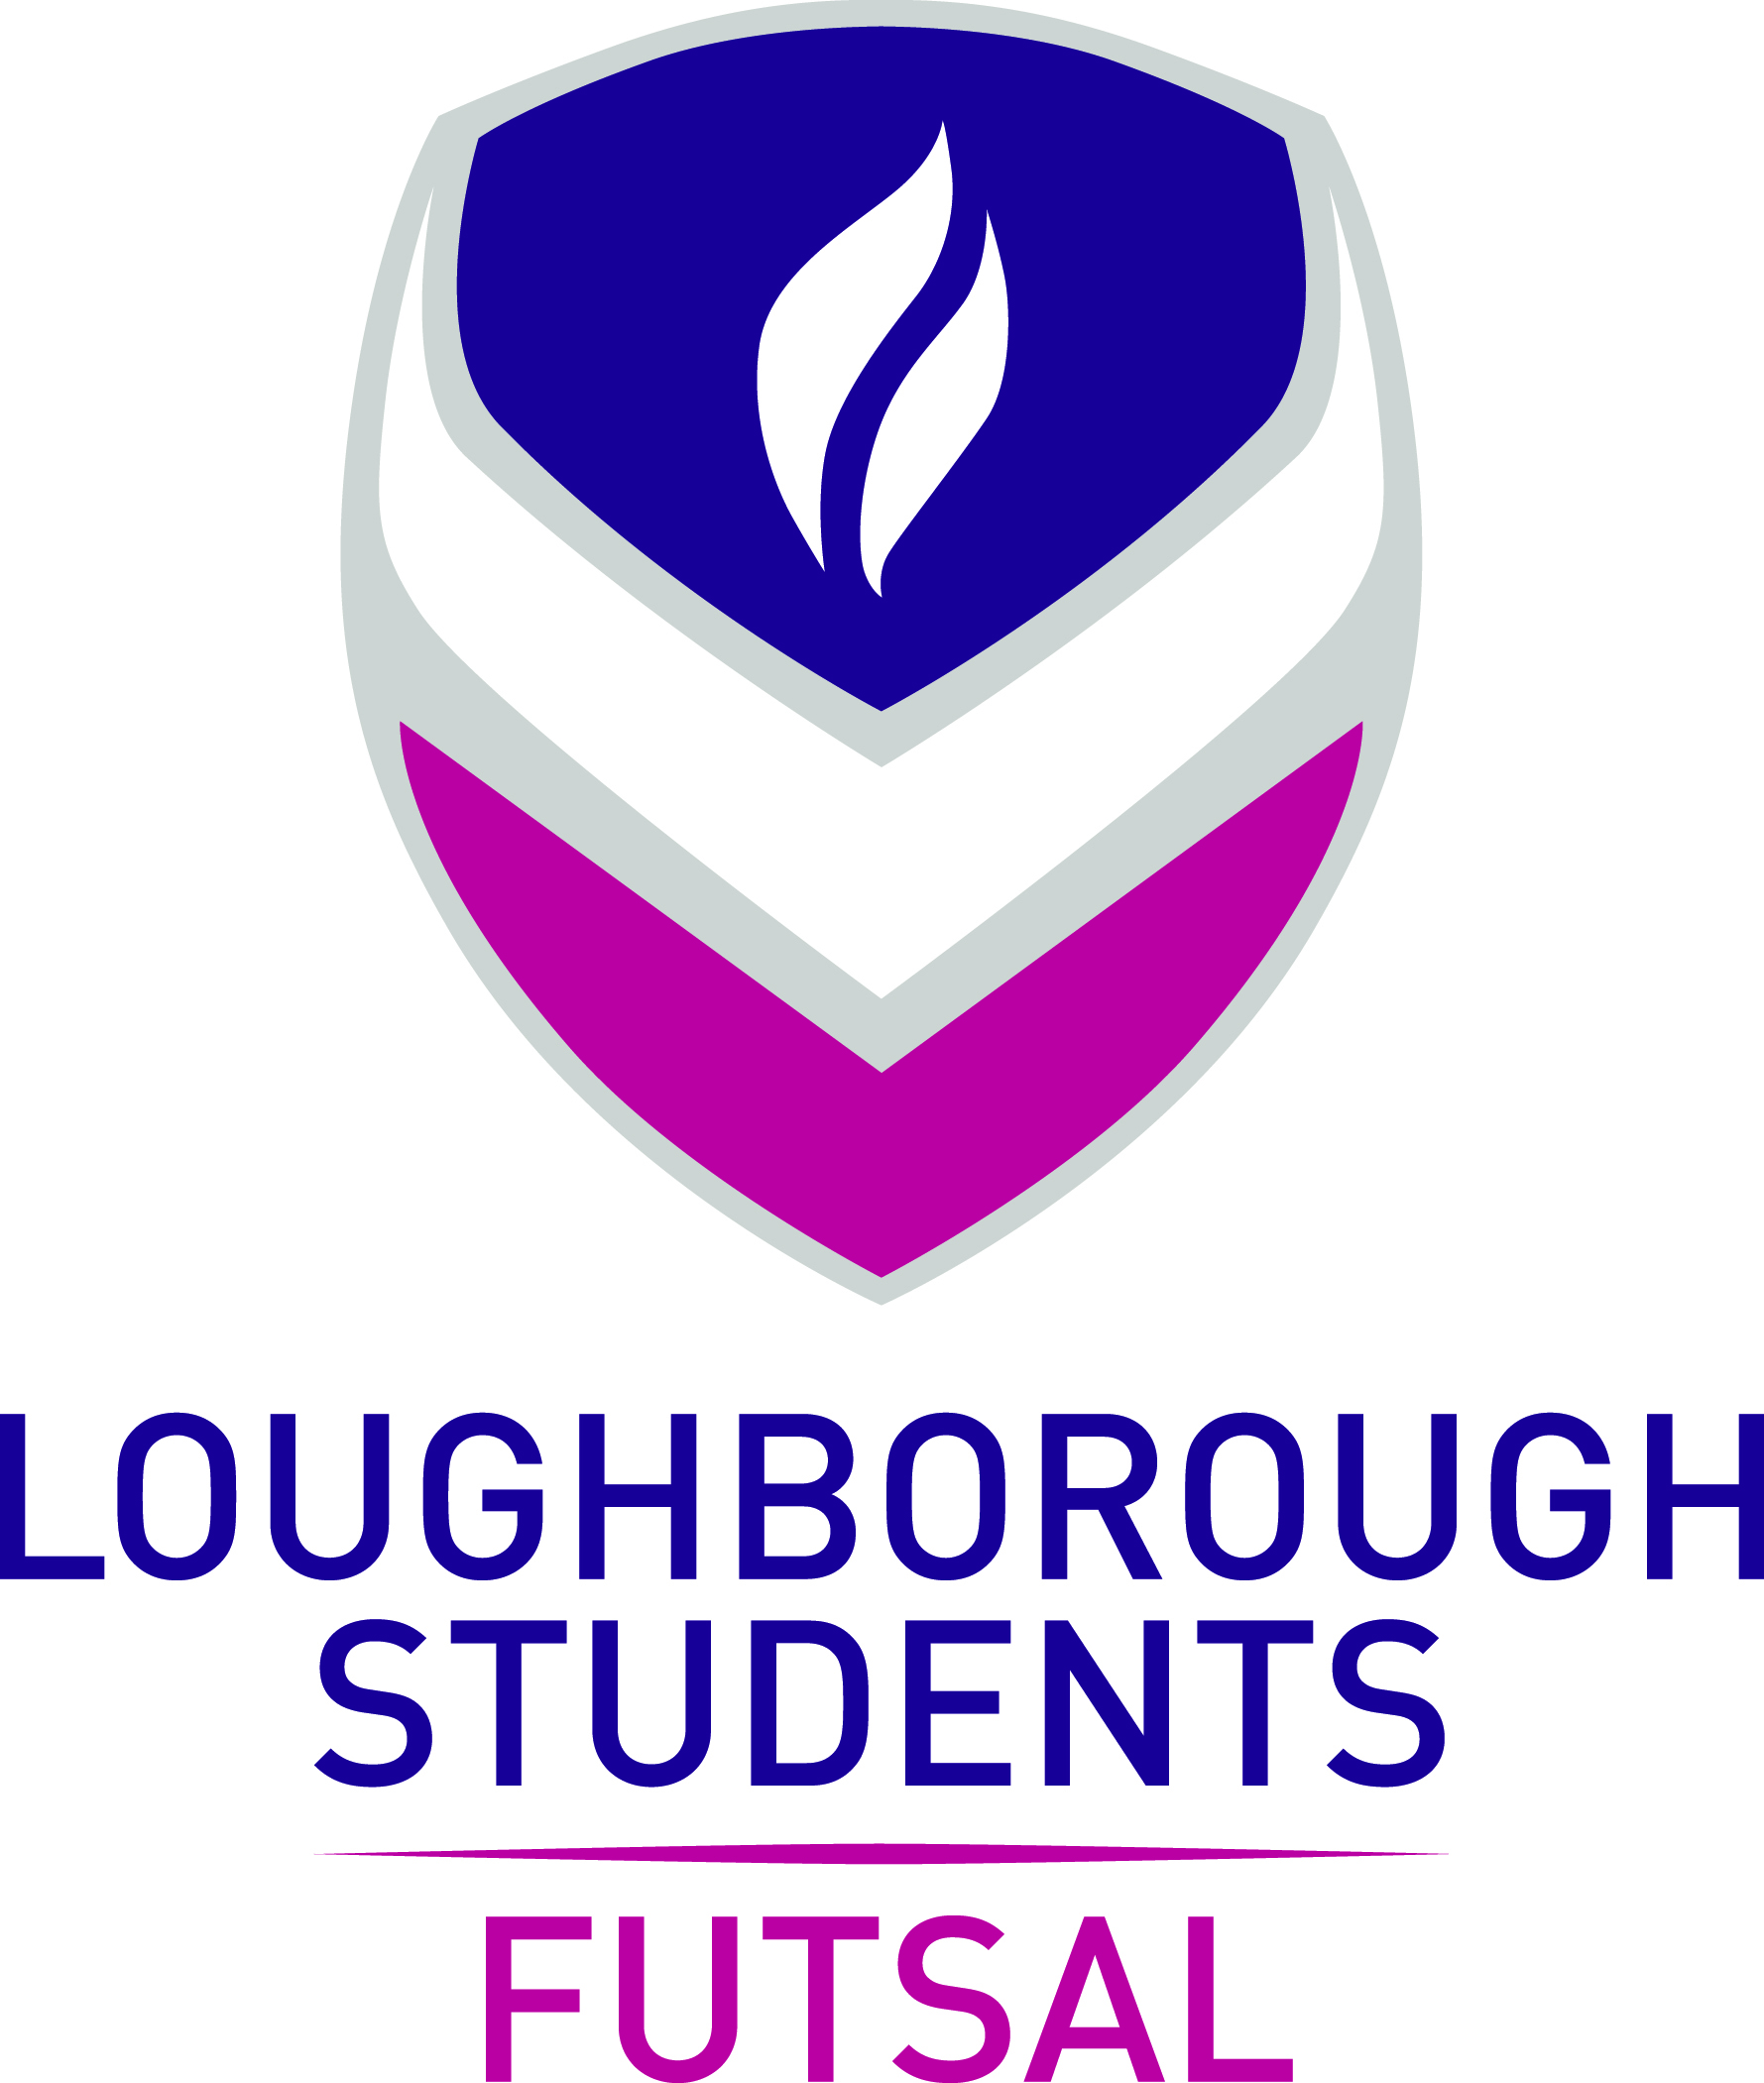 Loughborough Students Futsal logo